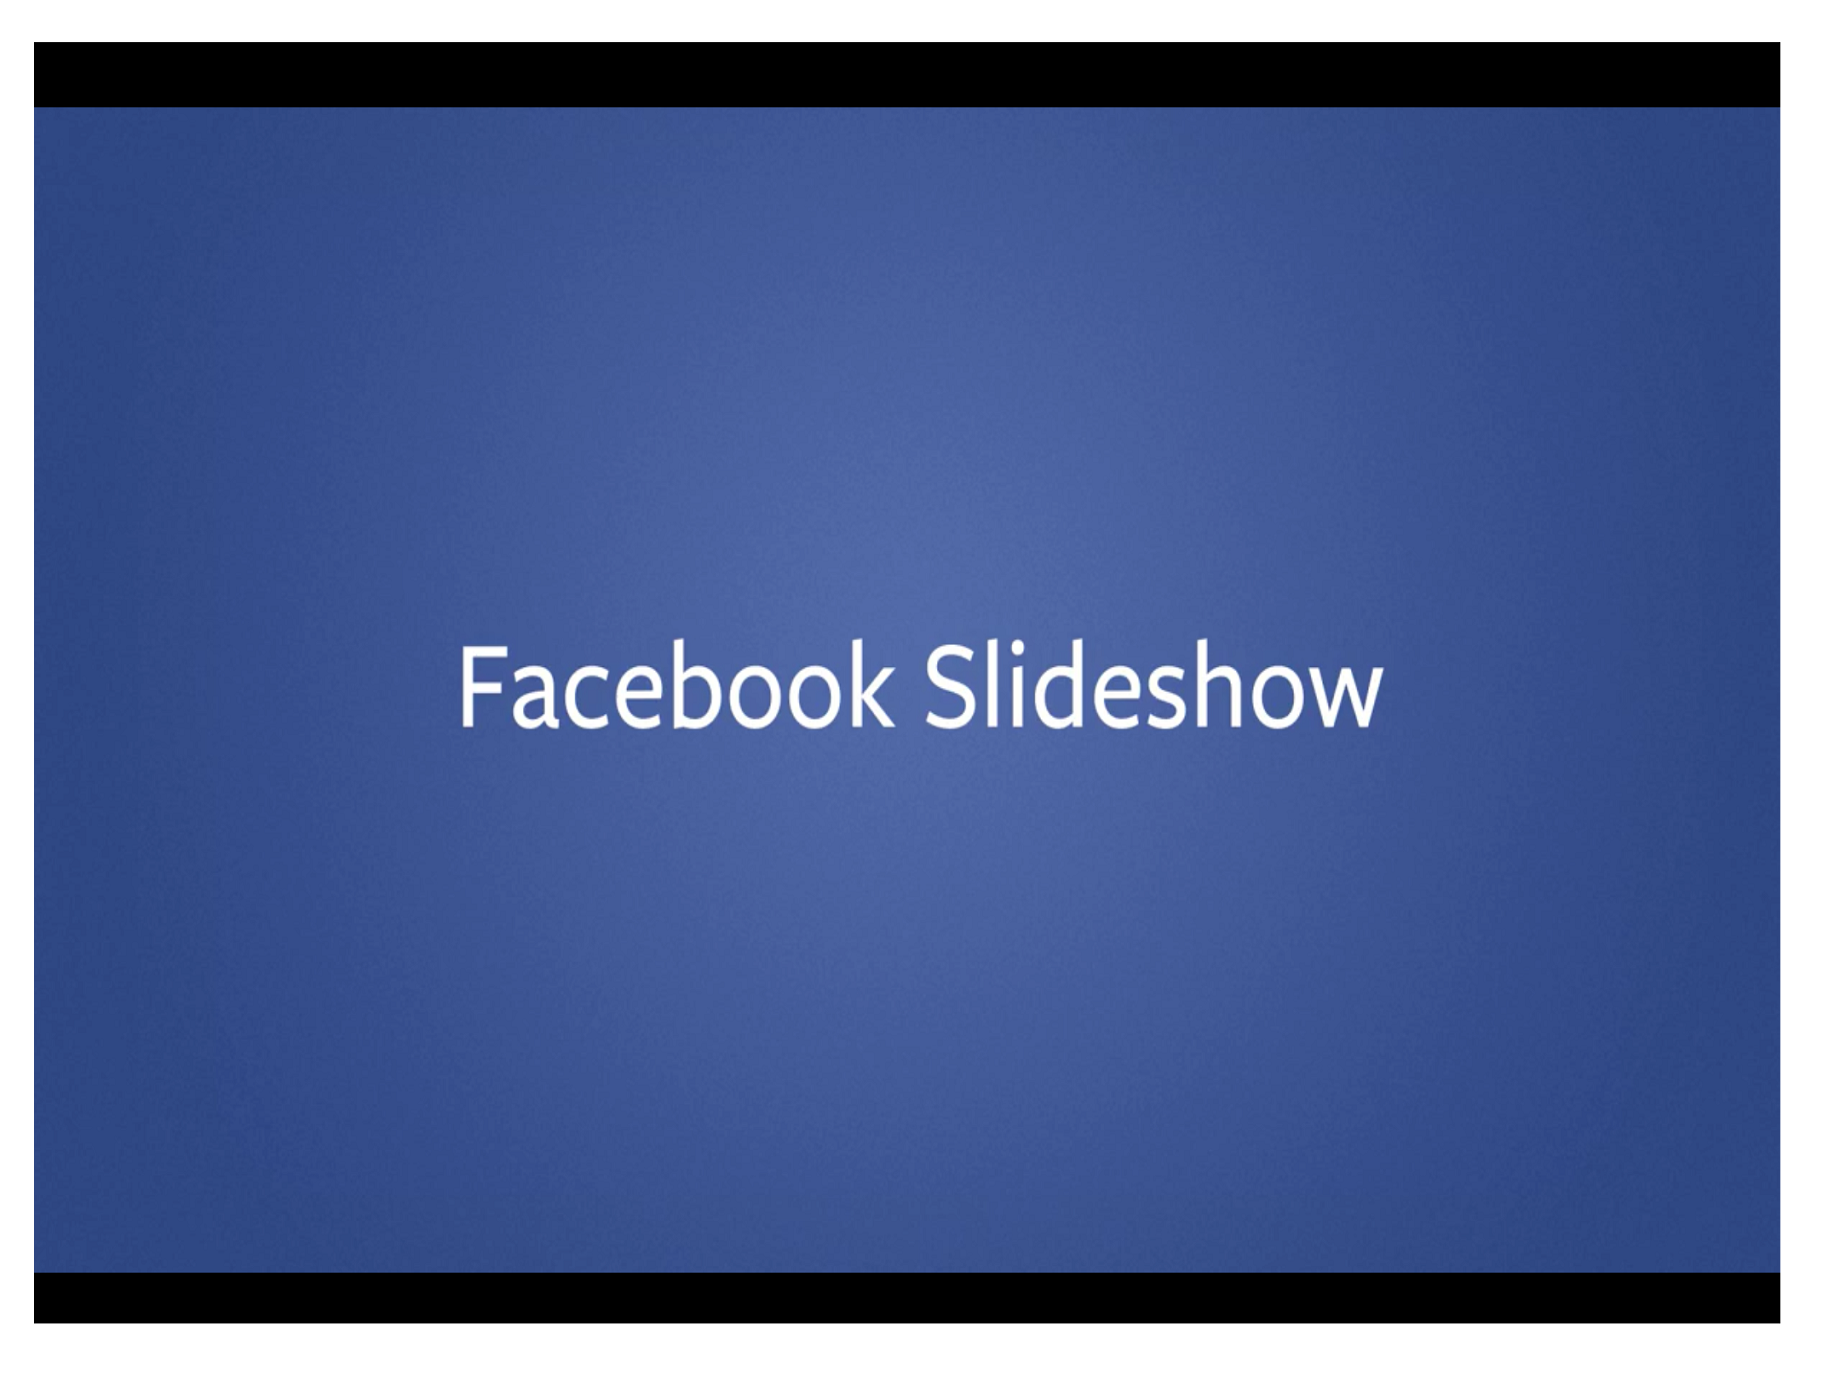 Facebook又有新招：Slideshow型態靜音廣告模式